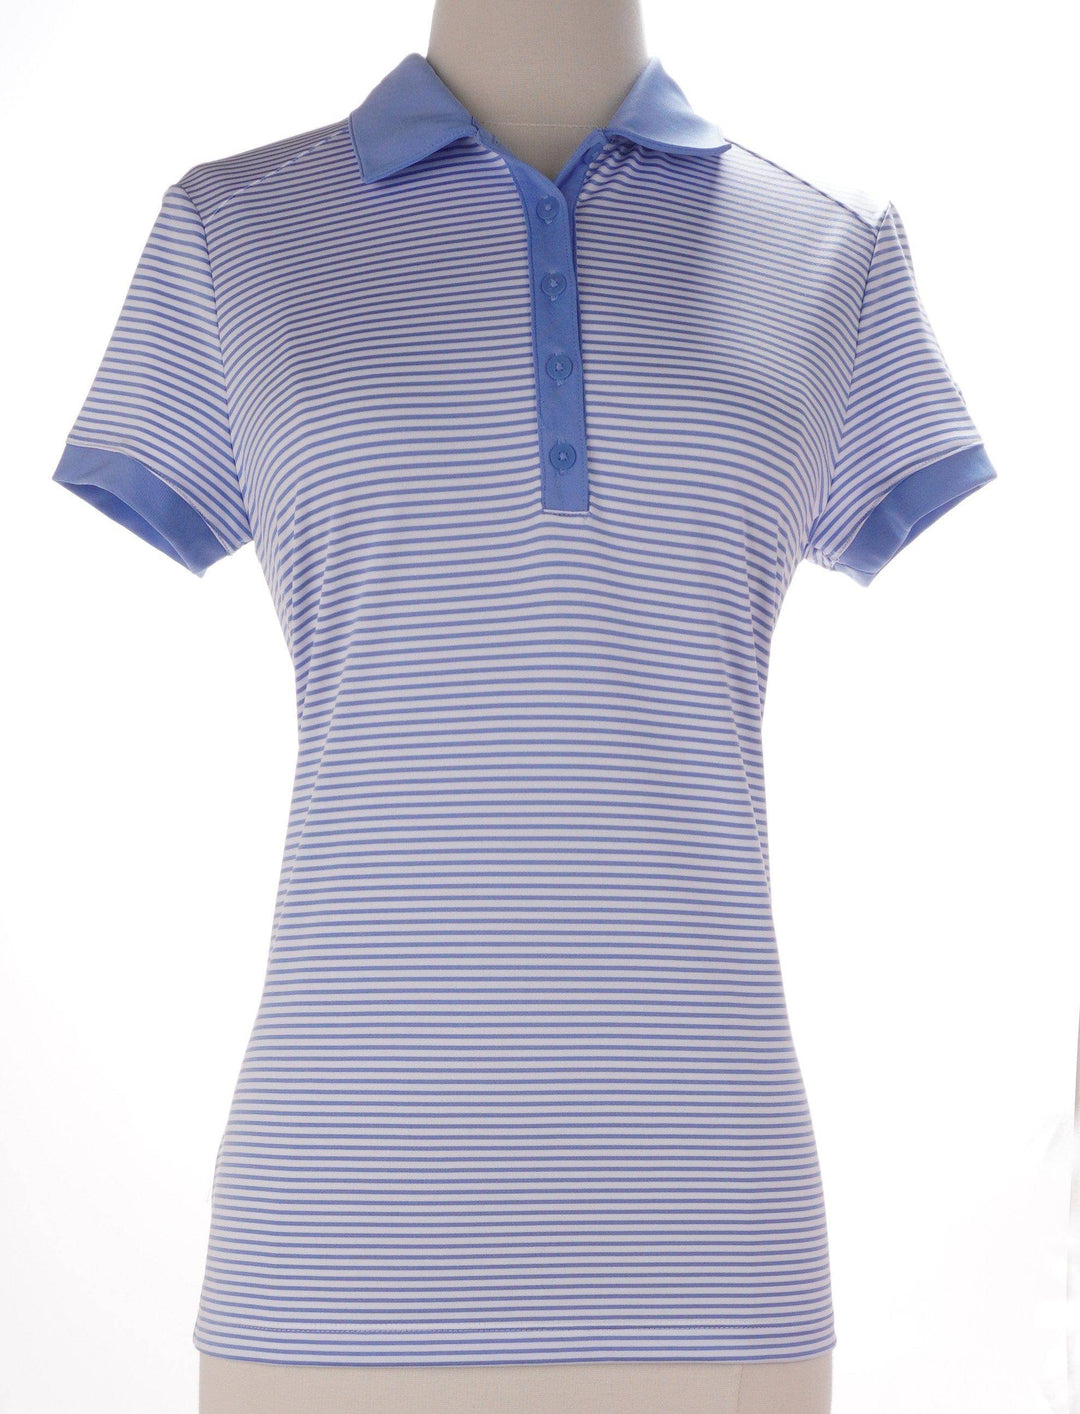 Nike Golf Blue / Medium / Consigned Nike Golf Short Sleeve Top - Blue Stripe - Size Medium